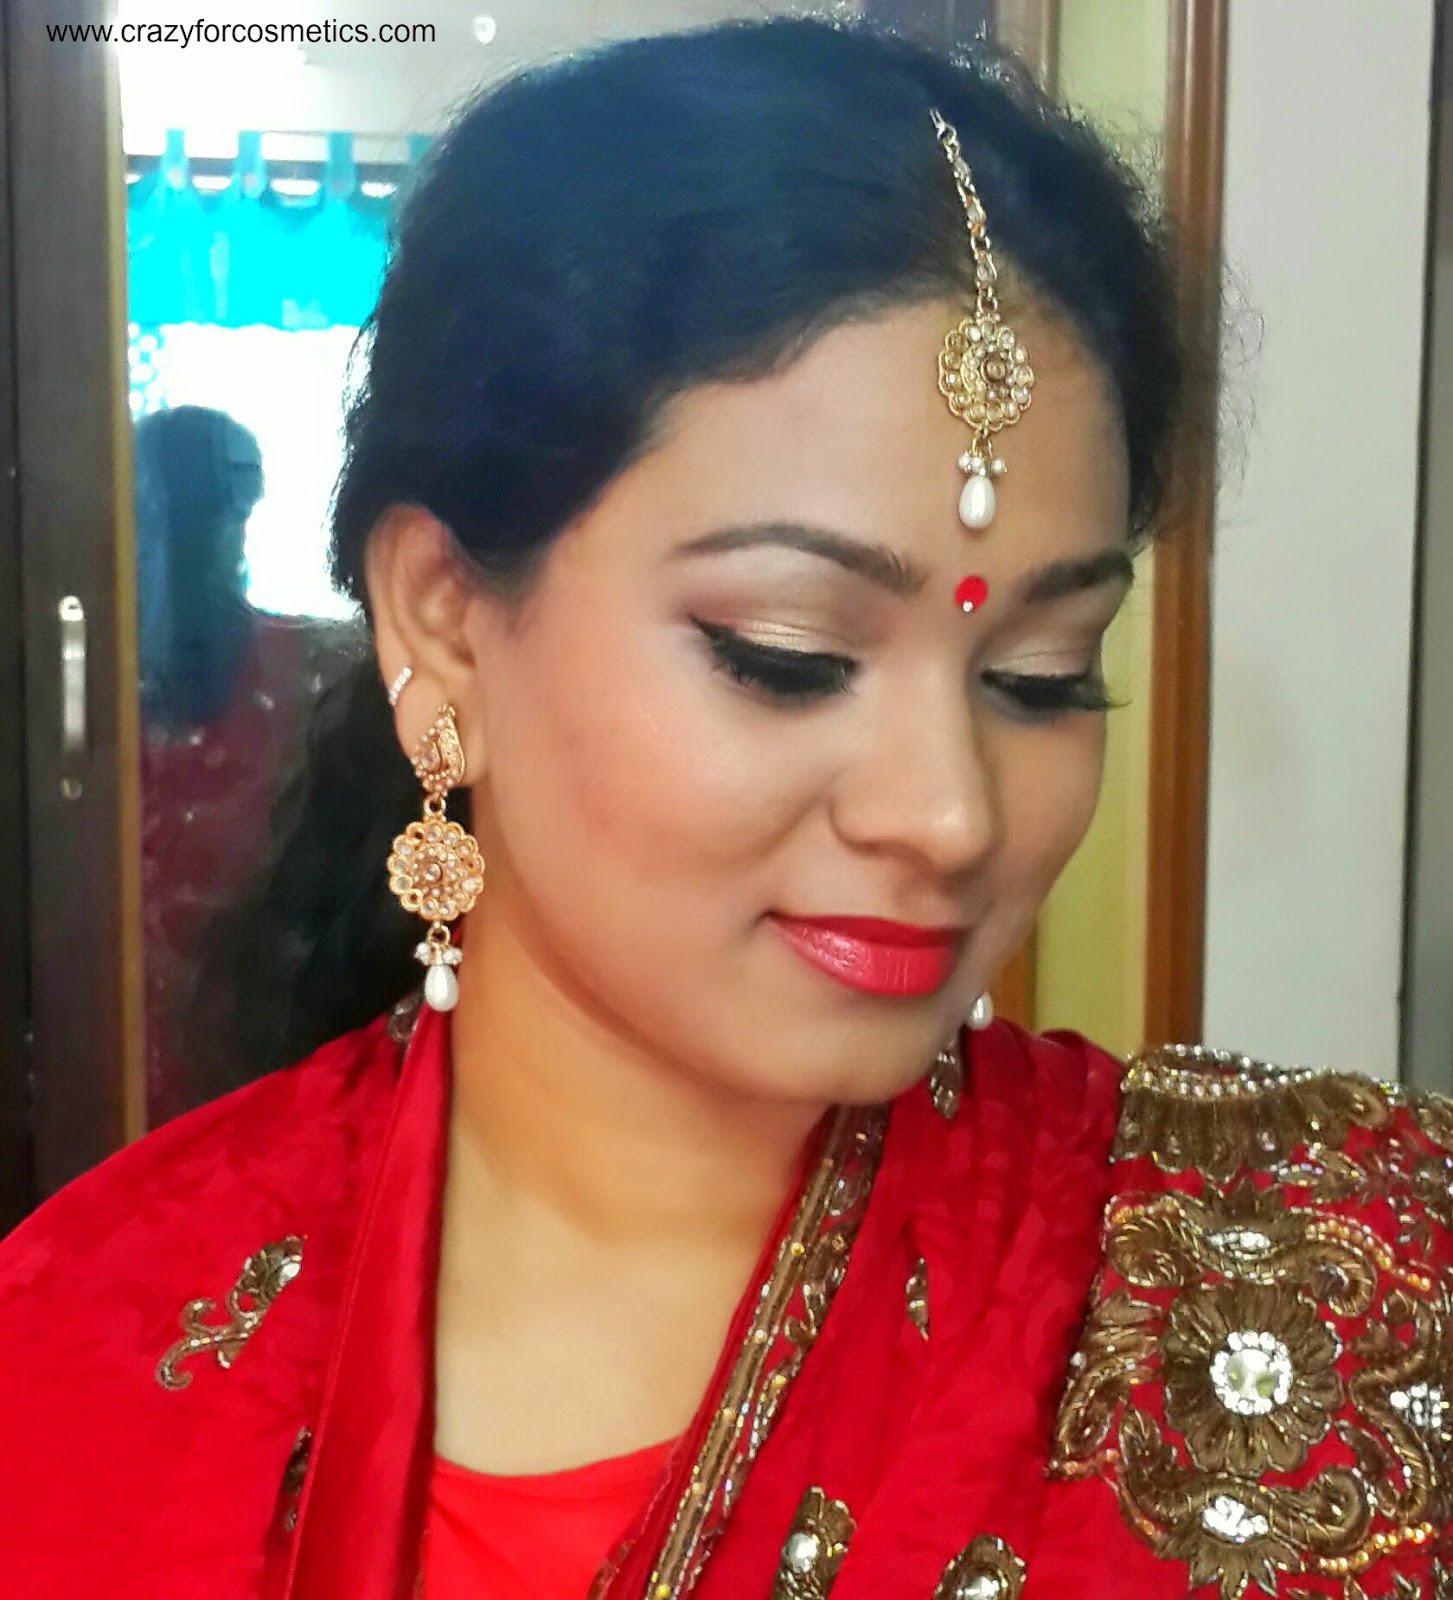 A vibrant red saree with an... - Venus bridal paradise | Facebook